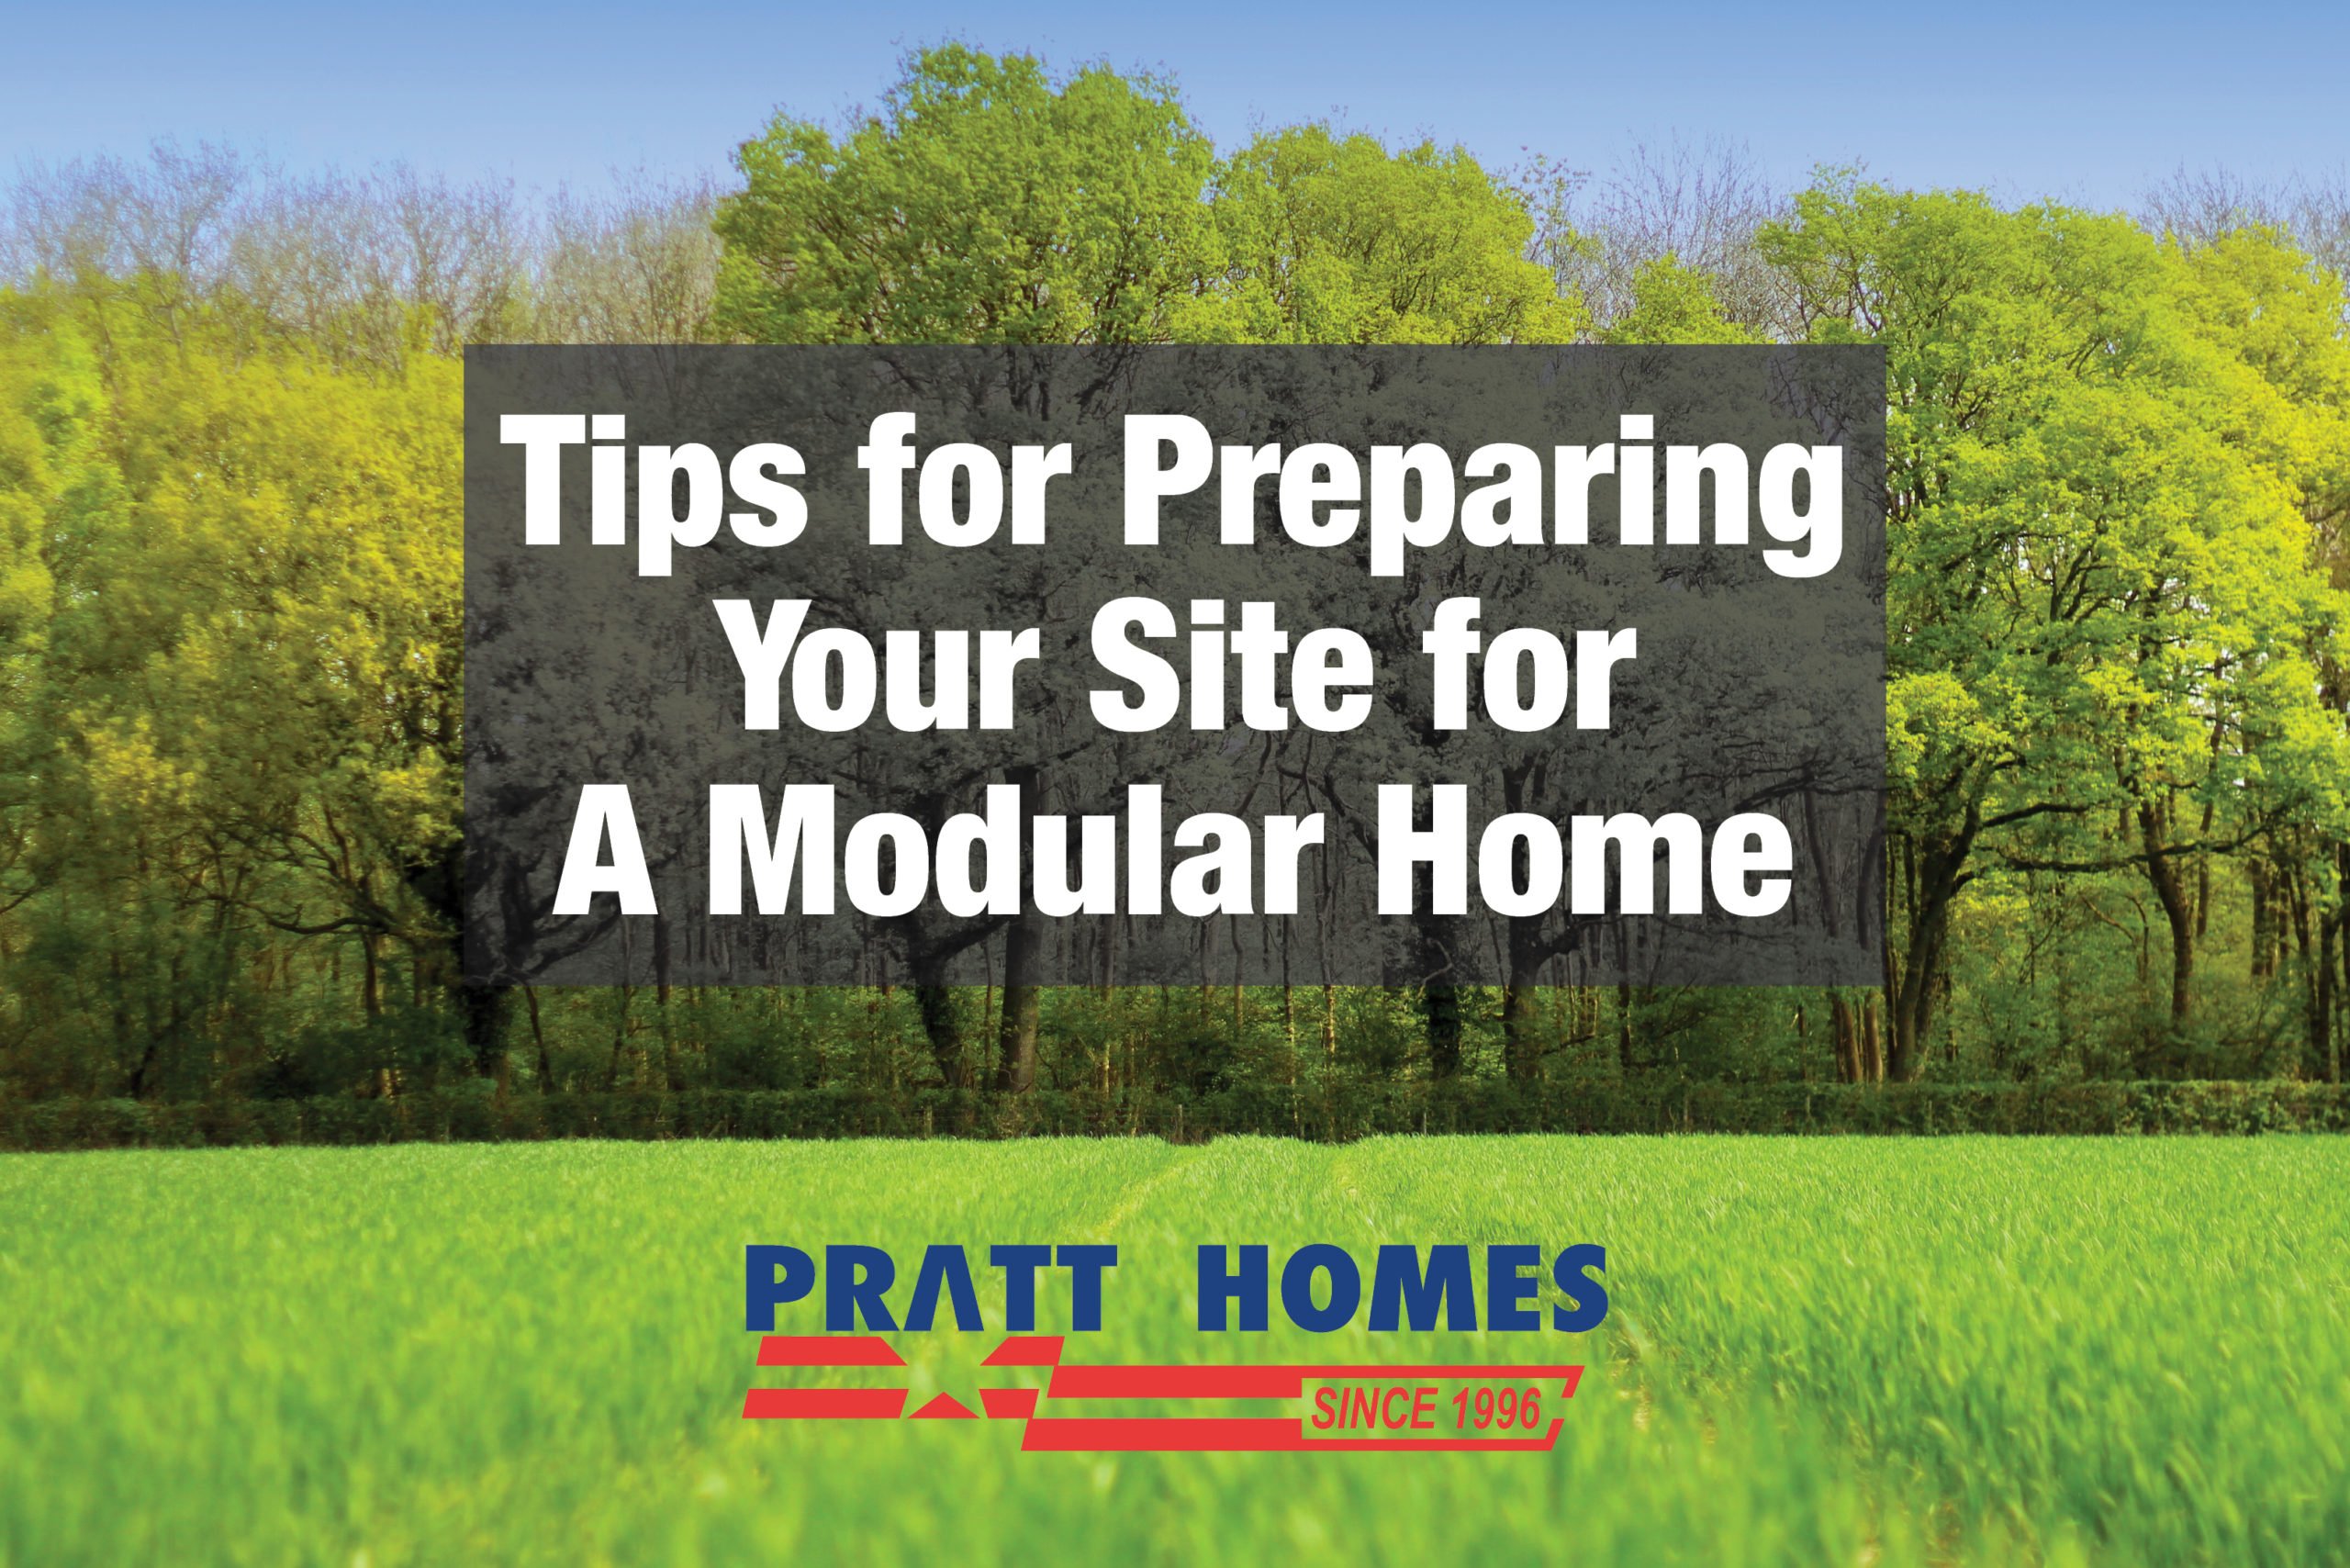 5 Tips for Preparing Your Site for A Modular Home Pratt Homes, Tyler, Texas